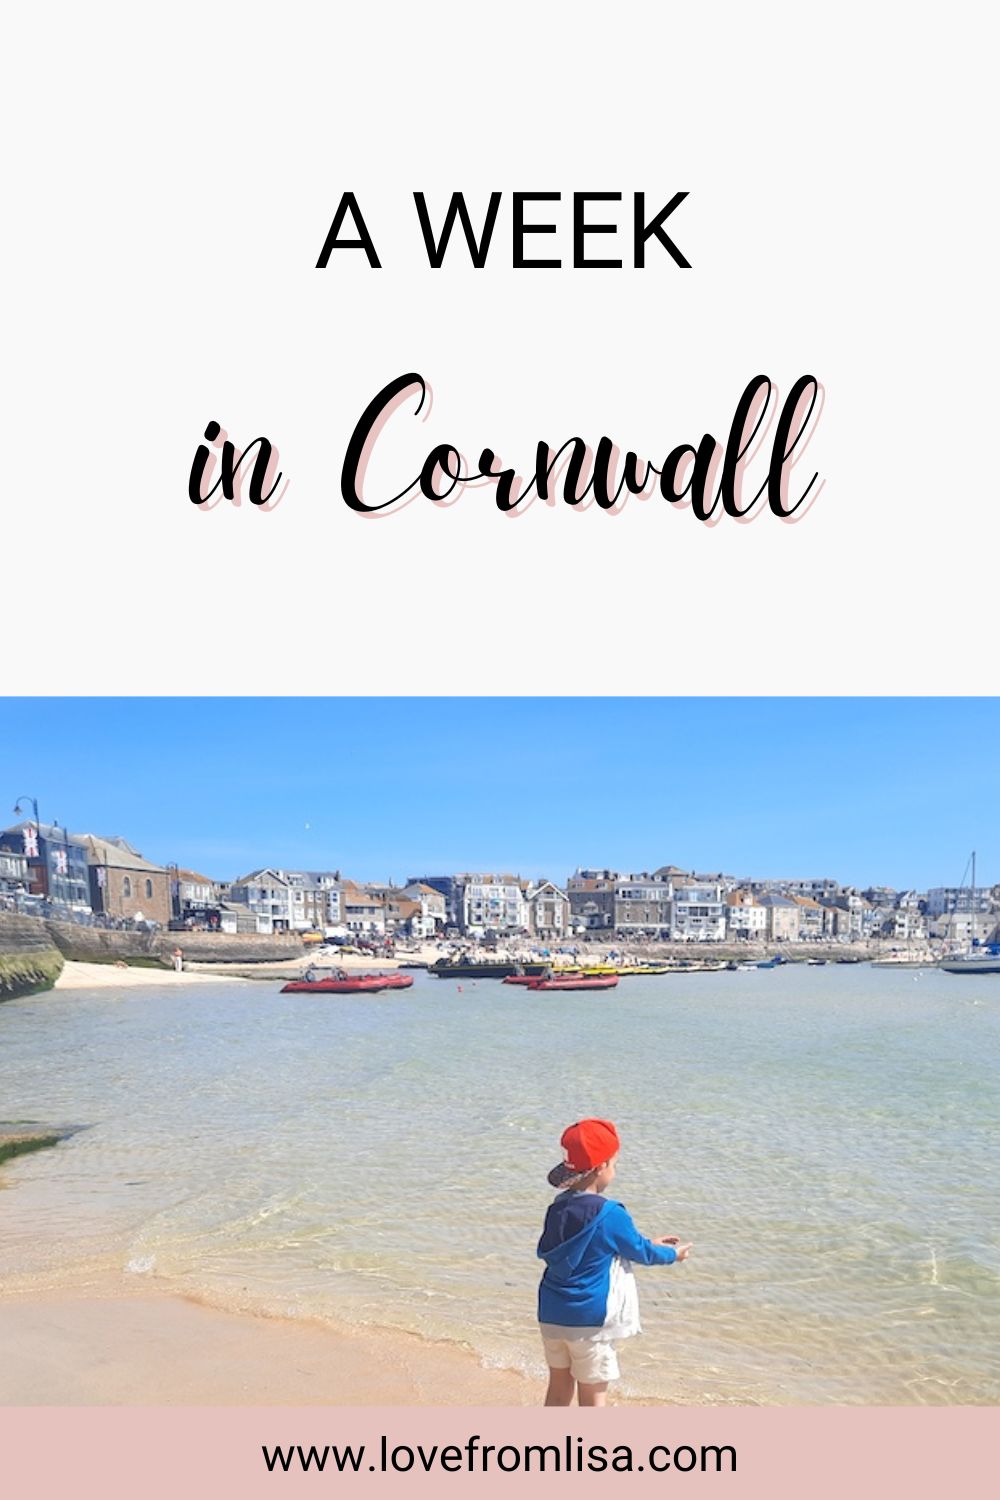 A week in Cornwall Pinterest